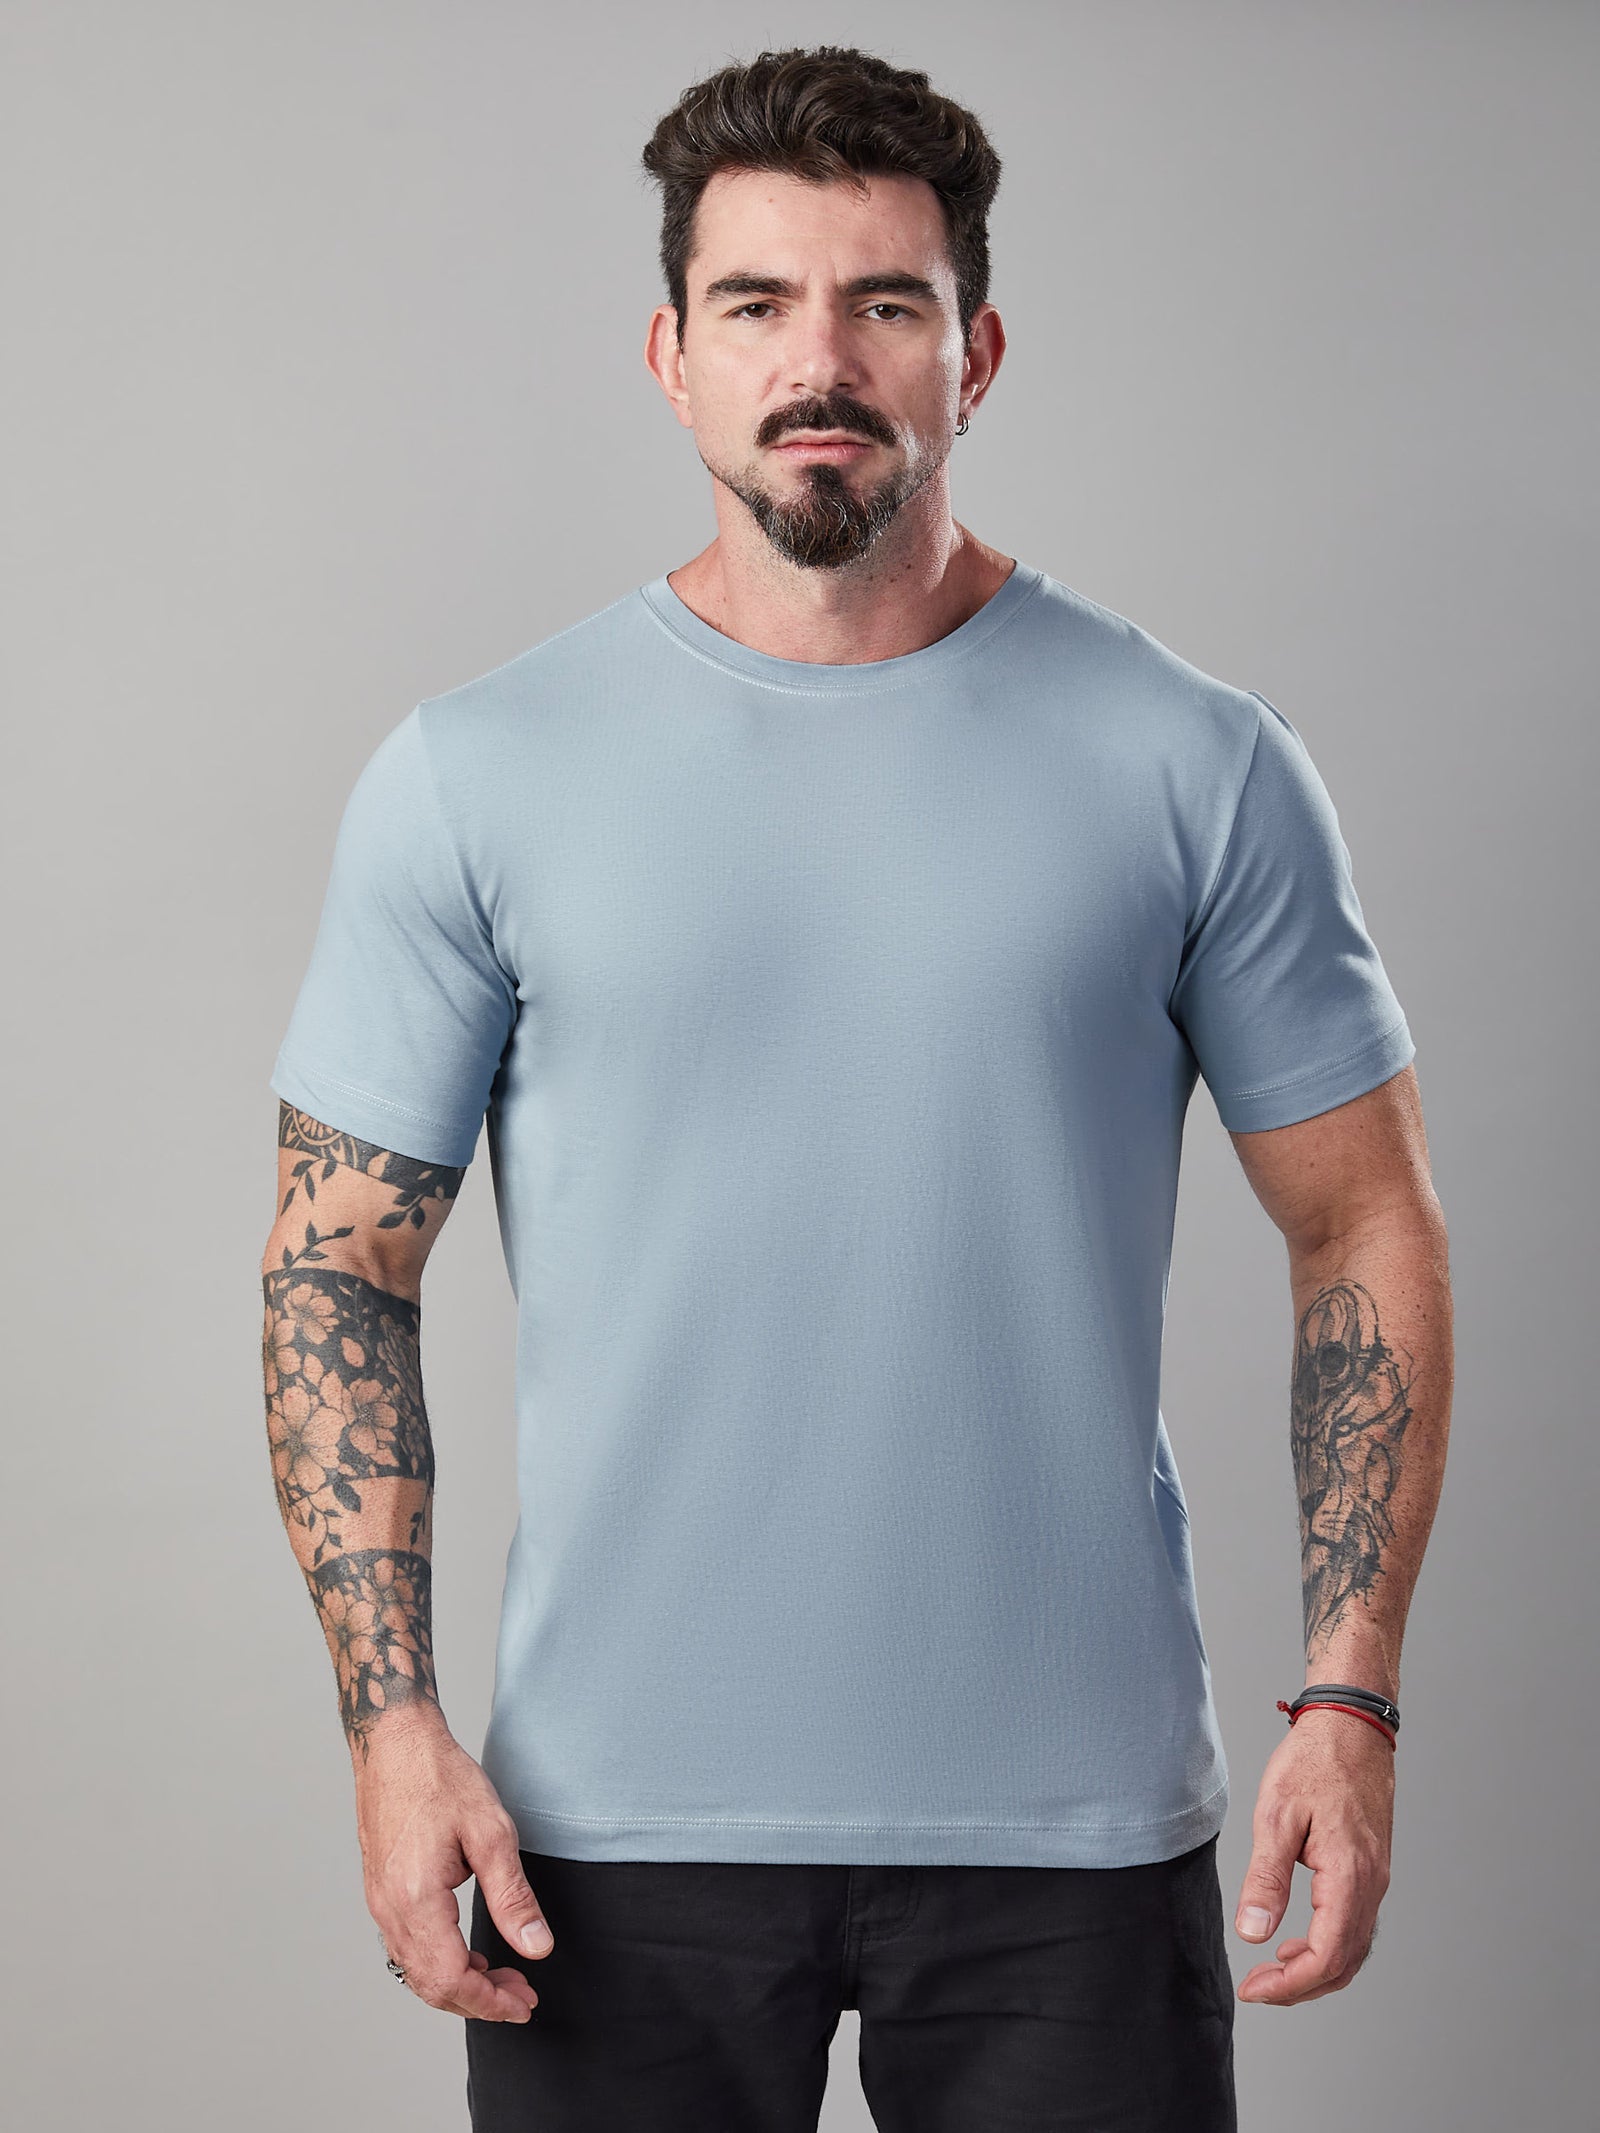 Camisetas masculinas Marcado cf-tamanho-m Página 2 - Unconventional